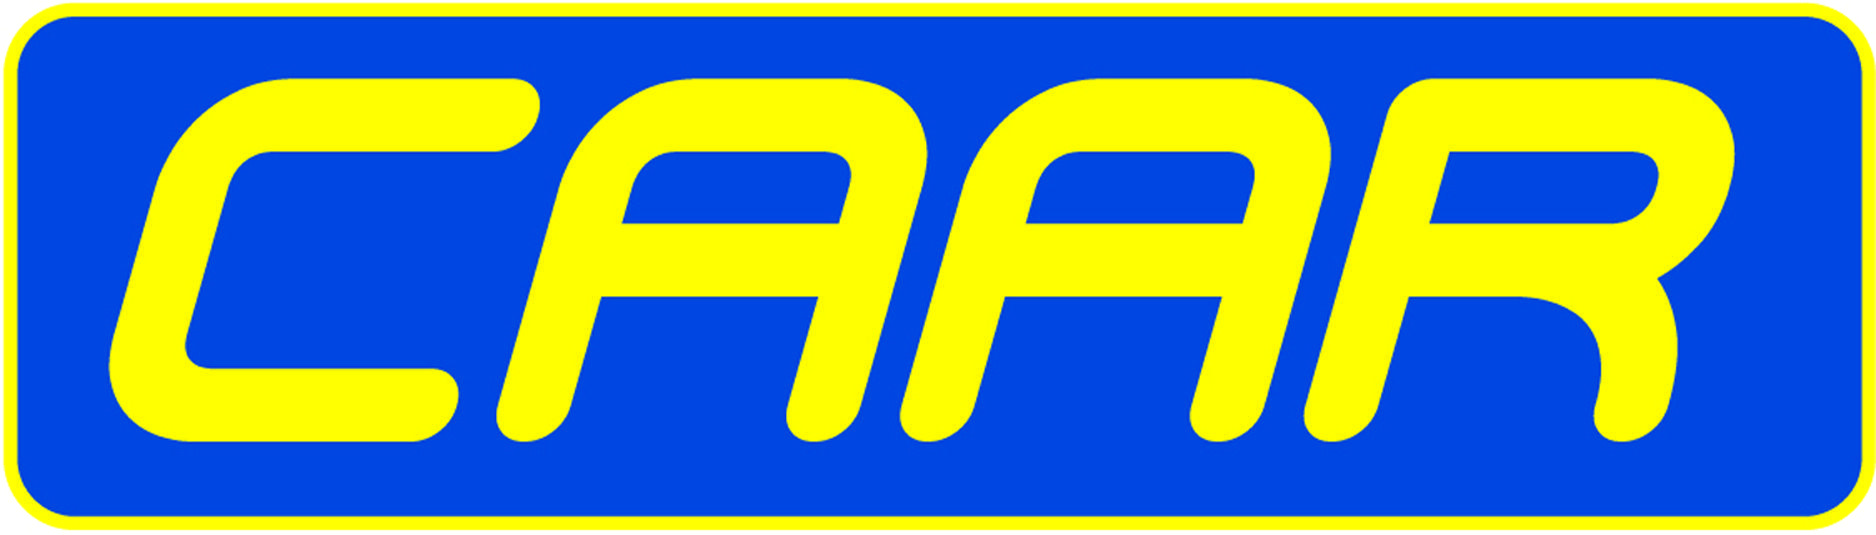 Caar Logo - ALCO Filters. Alco Filters (UK) Ltd signs up to supply CAAR Members